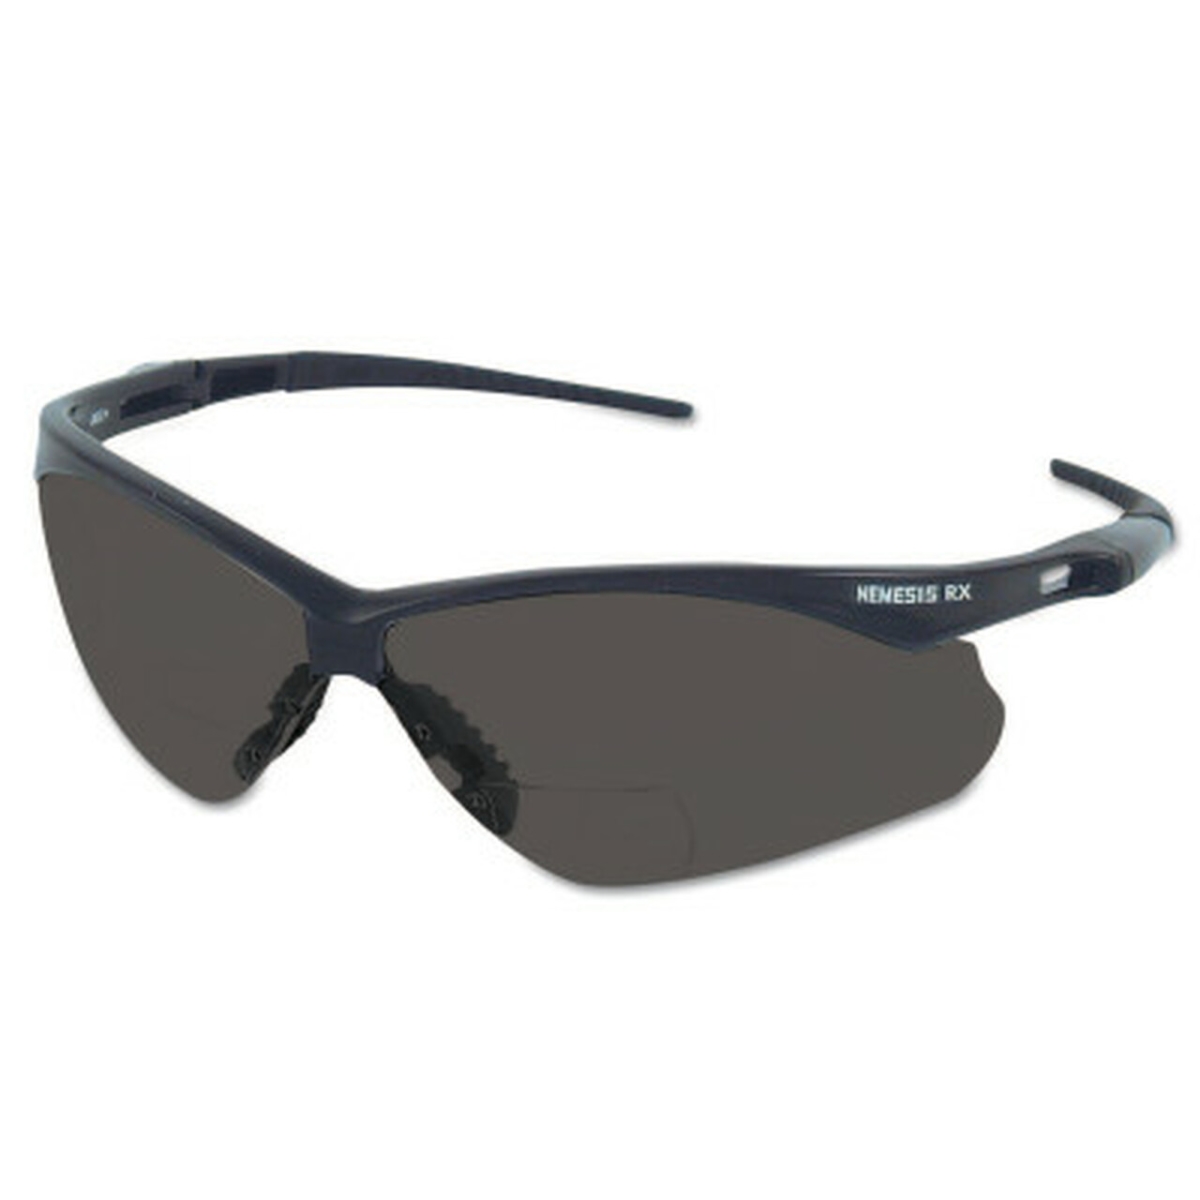 412-22518 2.0 Plus Spec Nemesis RX Safety Glasses, Smoke & Black -  Kleenguard